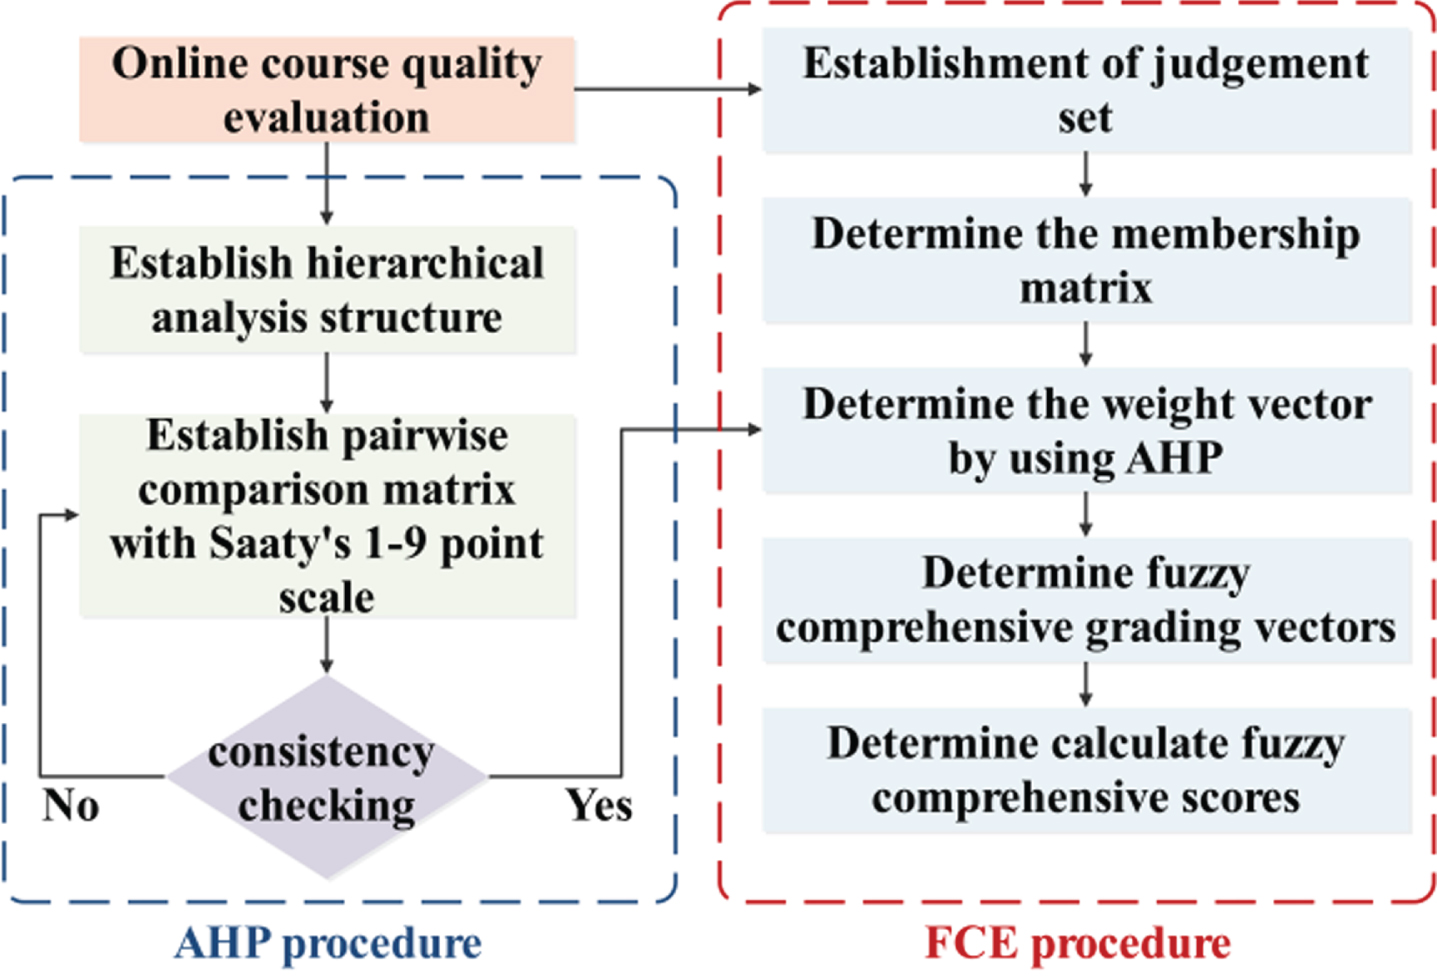 Evaluation procedure of integrated FCE-AHP method.